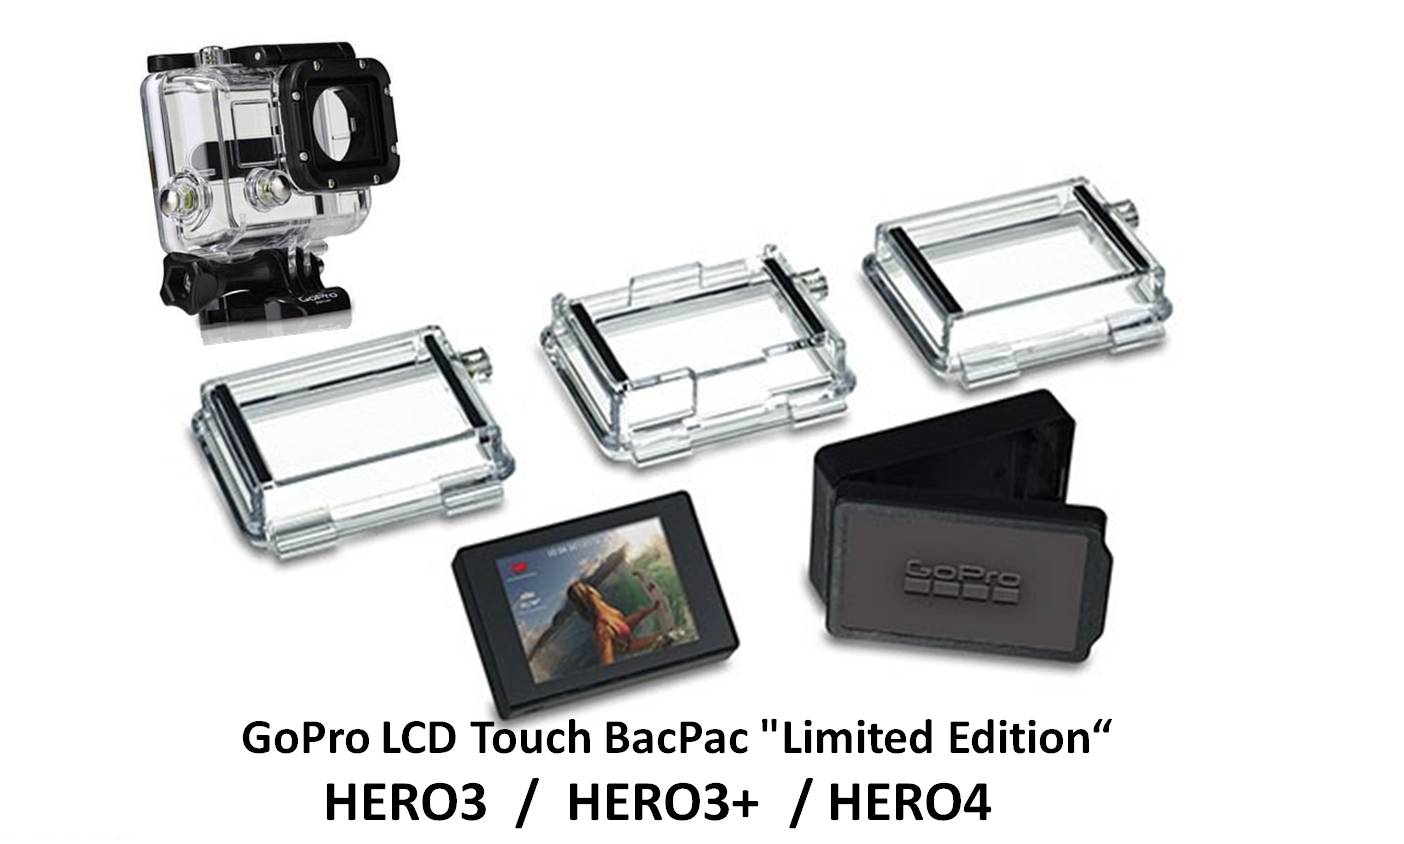 Комплектация LCD Touch BacPac Limited Edition для камеры GoPro HERO3+ / HERO4